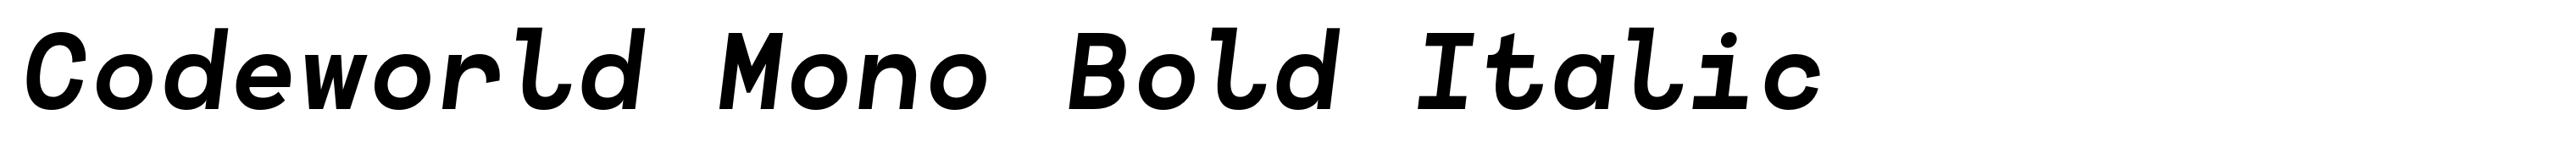 Codeworld Mono Bold Italic